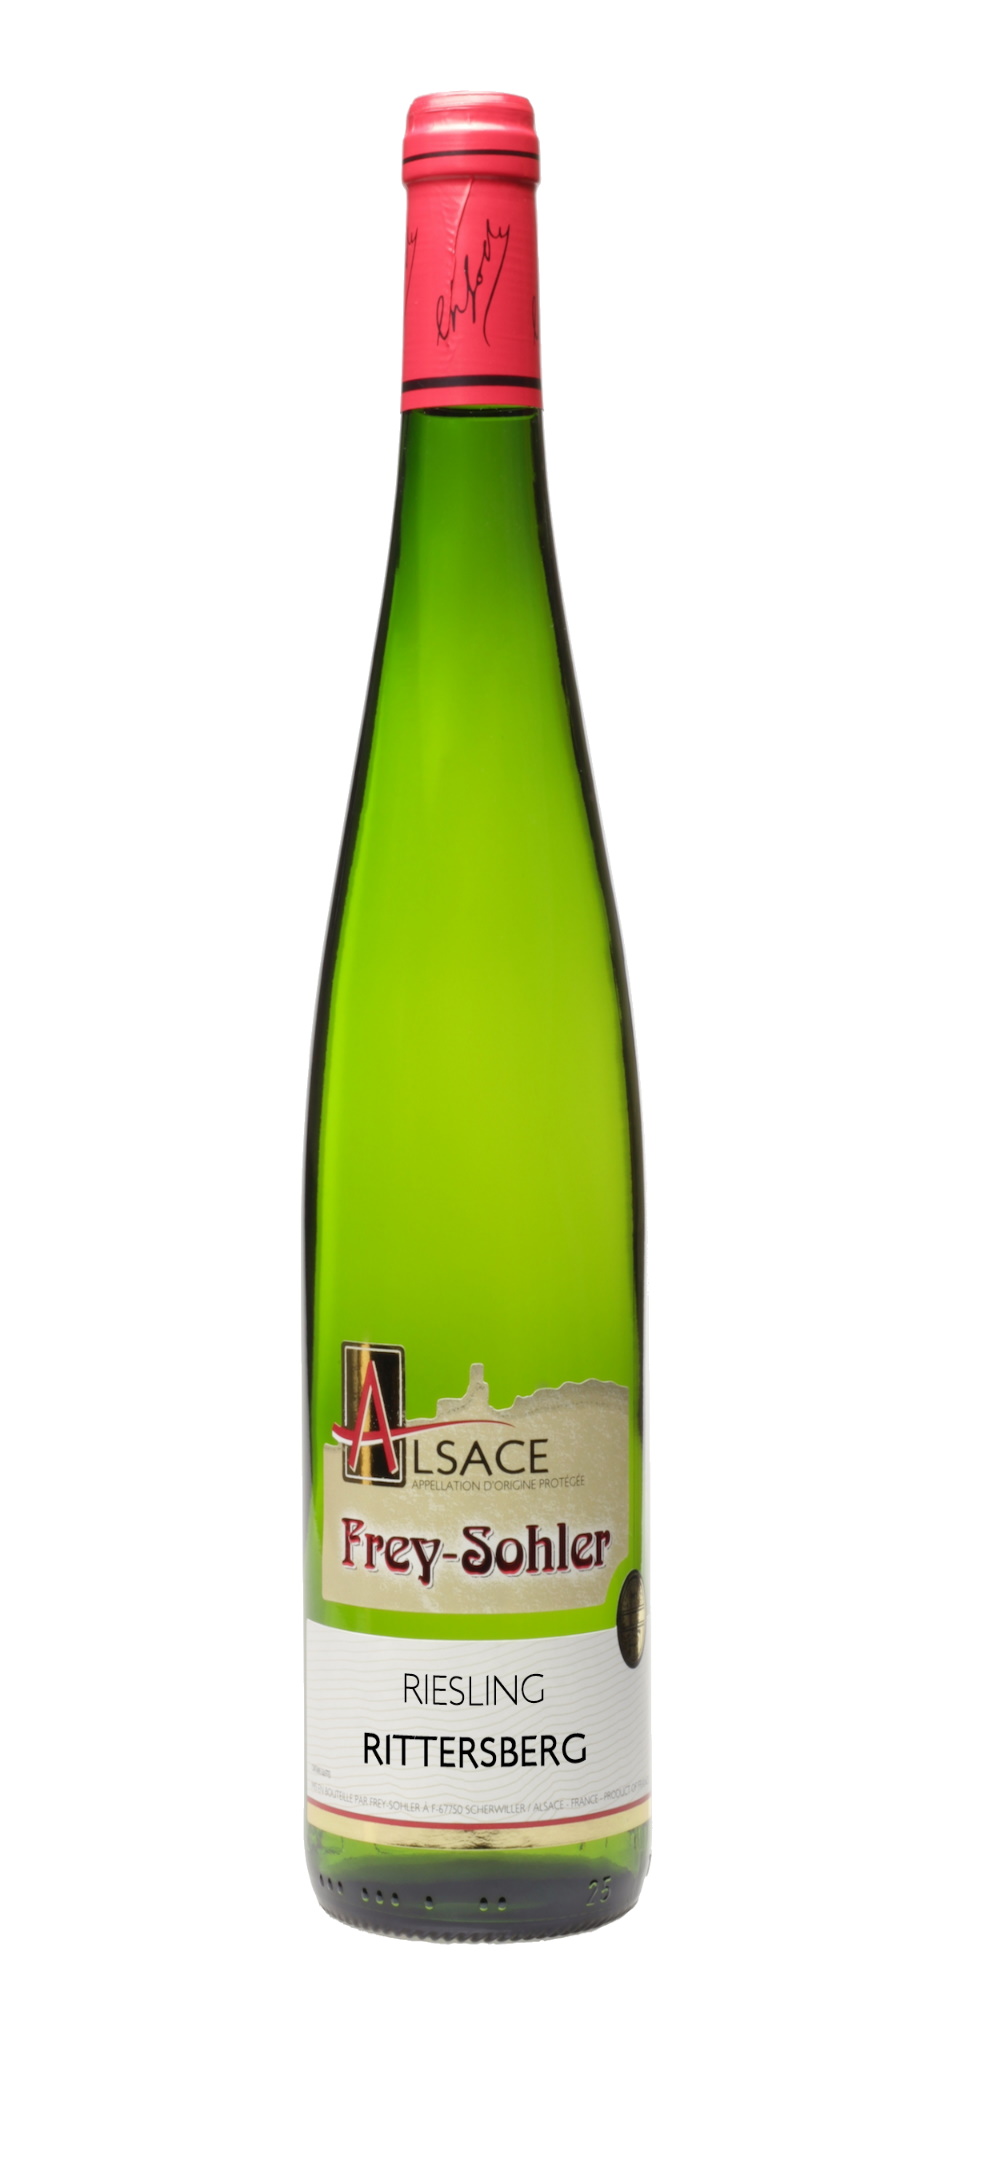 Riesling Rittersberg FRey-Sohler-Lalsace-en-bouteille